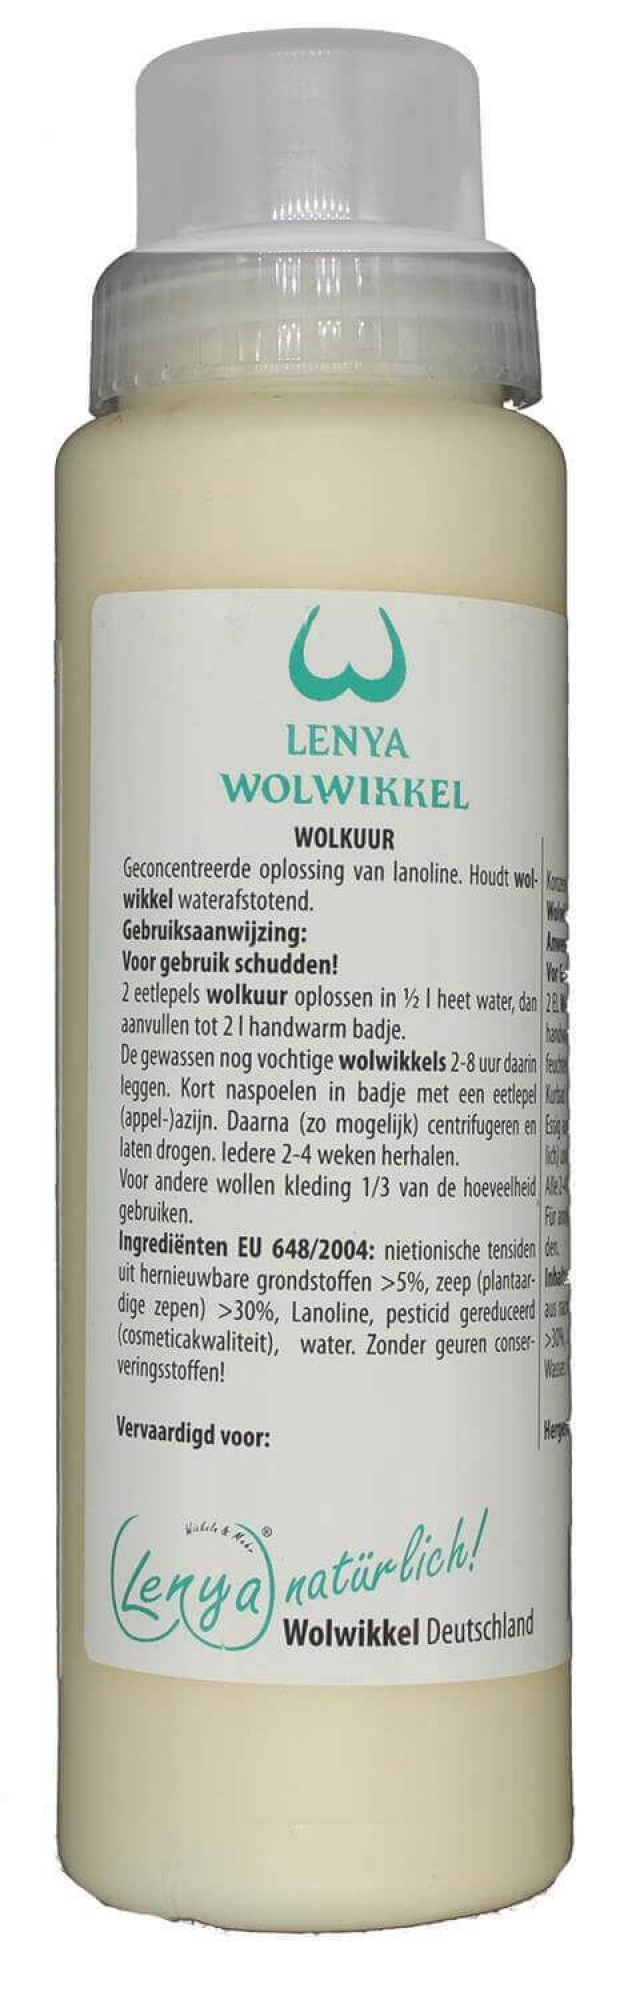 Lenya Wolwikkel Wollkur